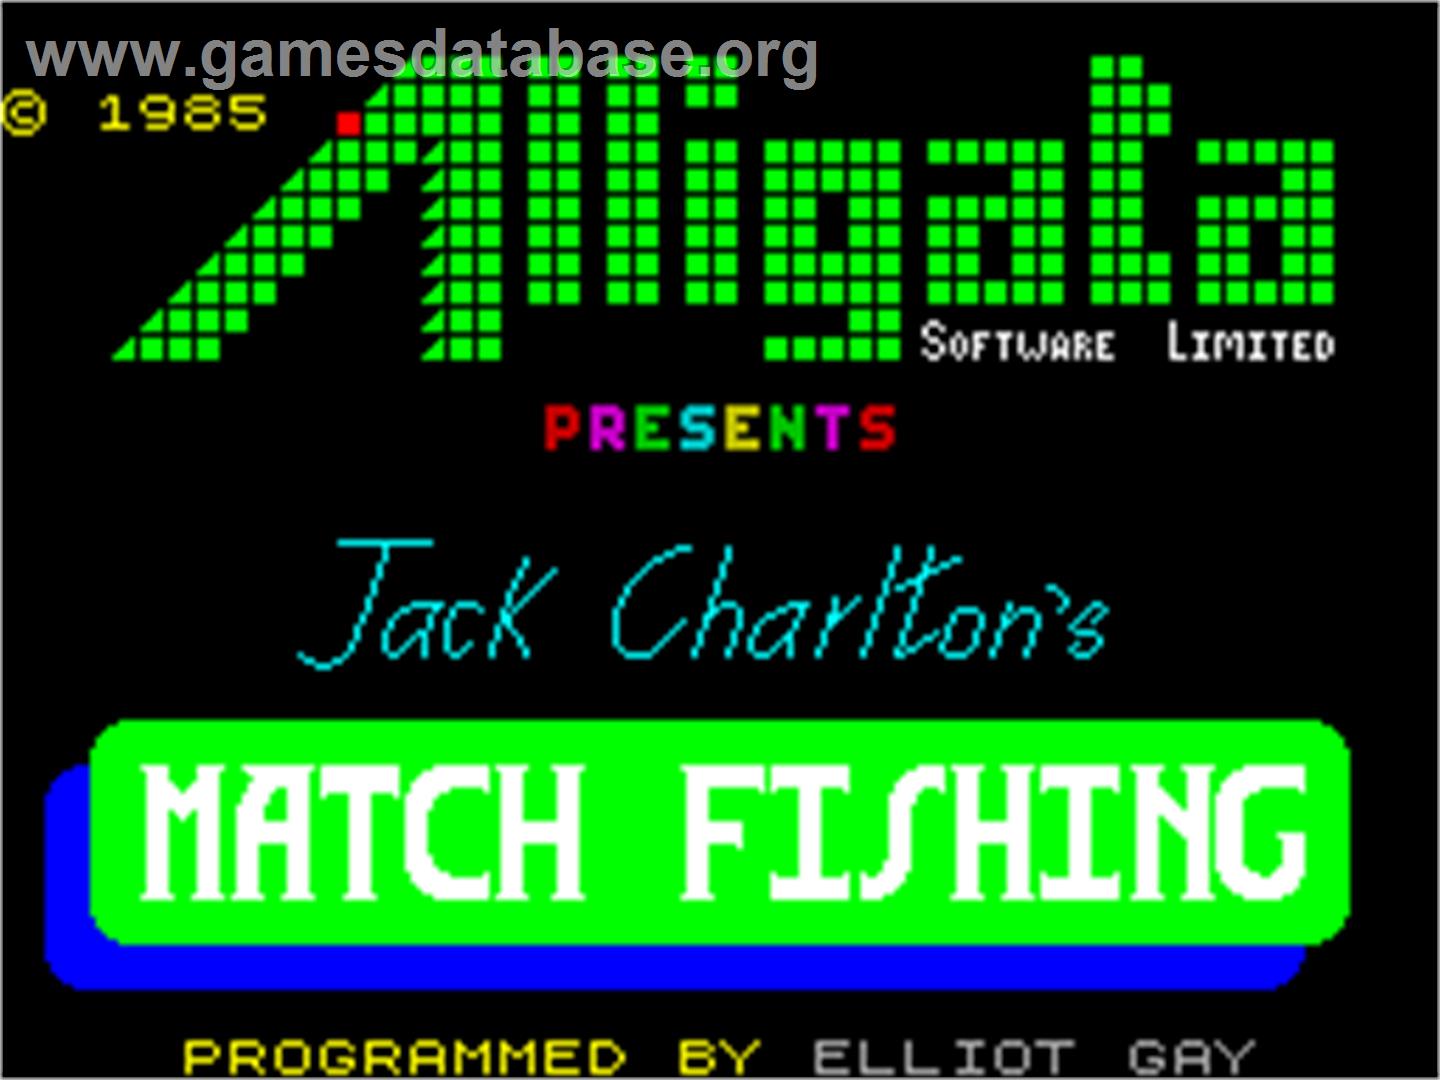 Jack Charlton's Match Fishing - Sinclair ZX Spectrum - Artwork - Title Screen